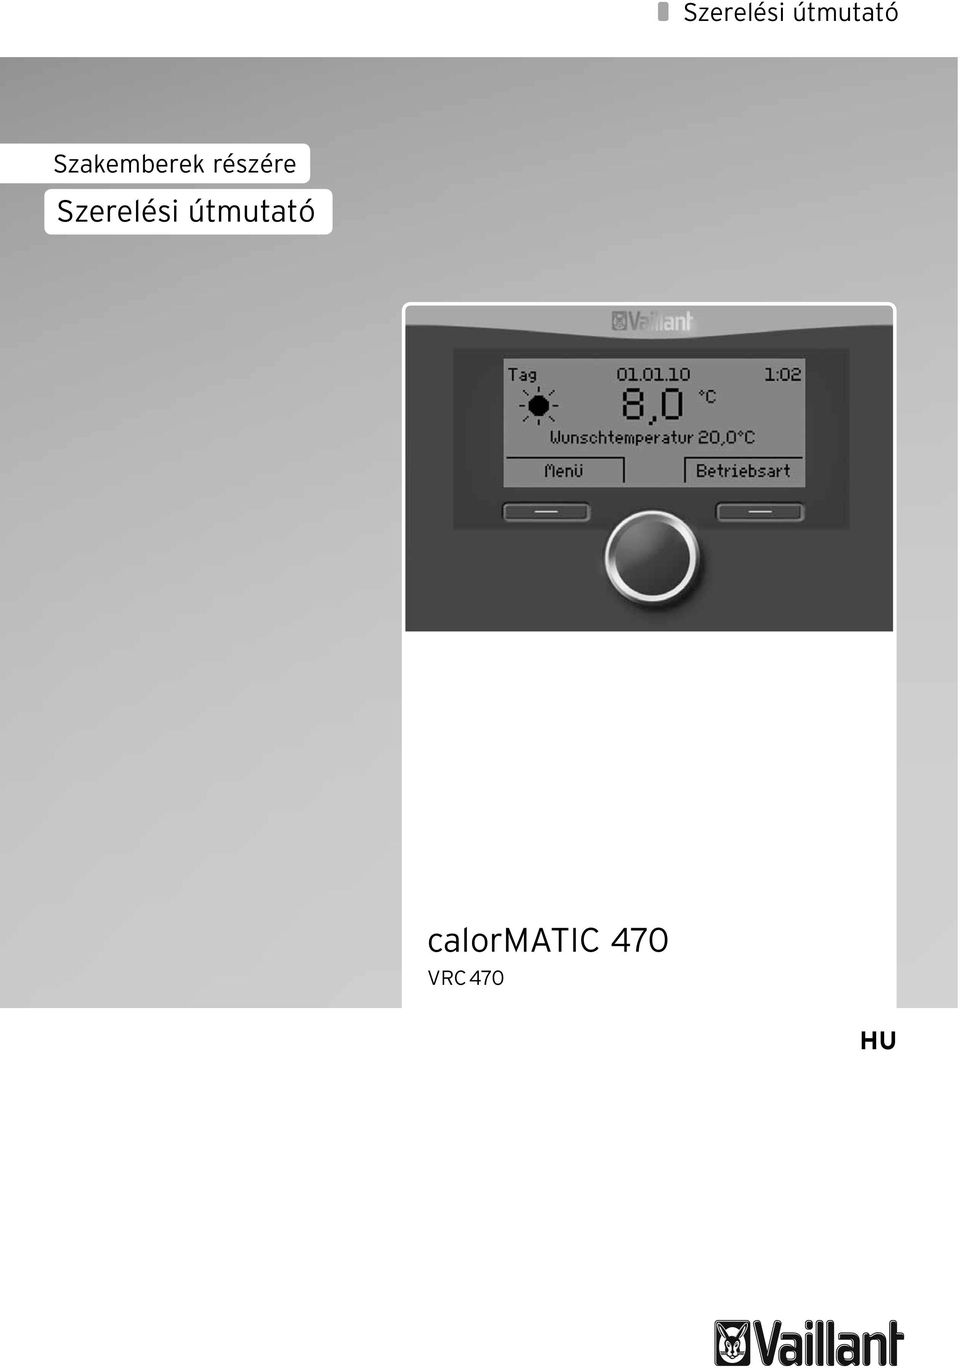 calormatic 470 VRC